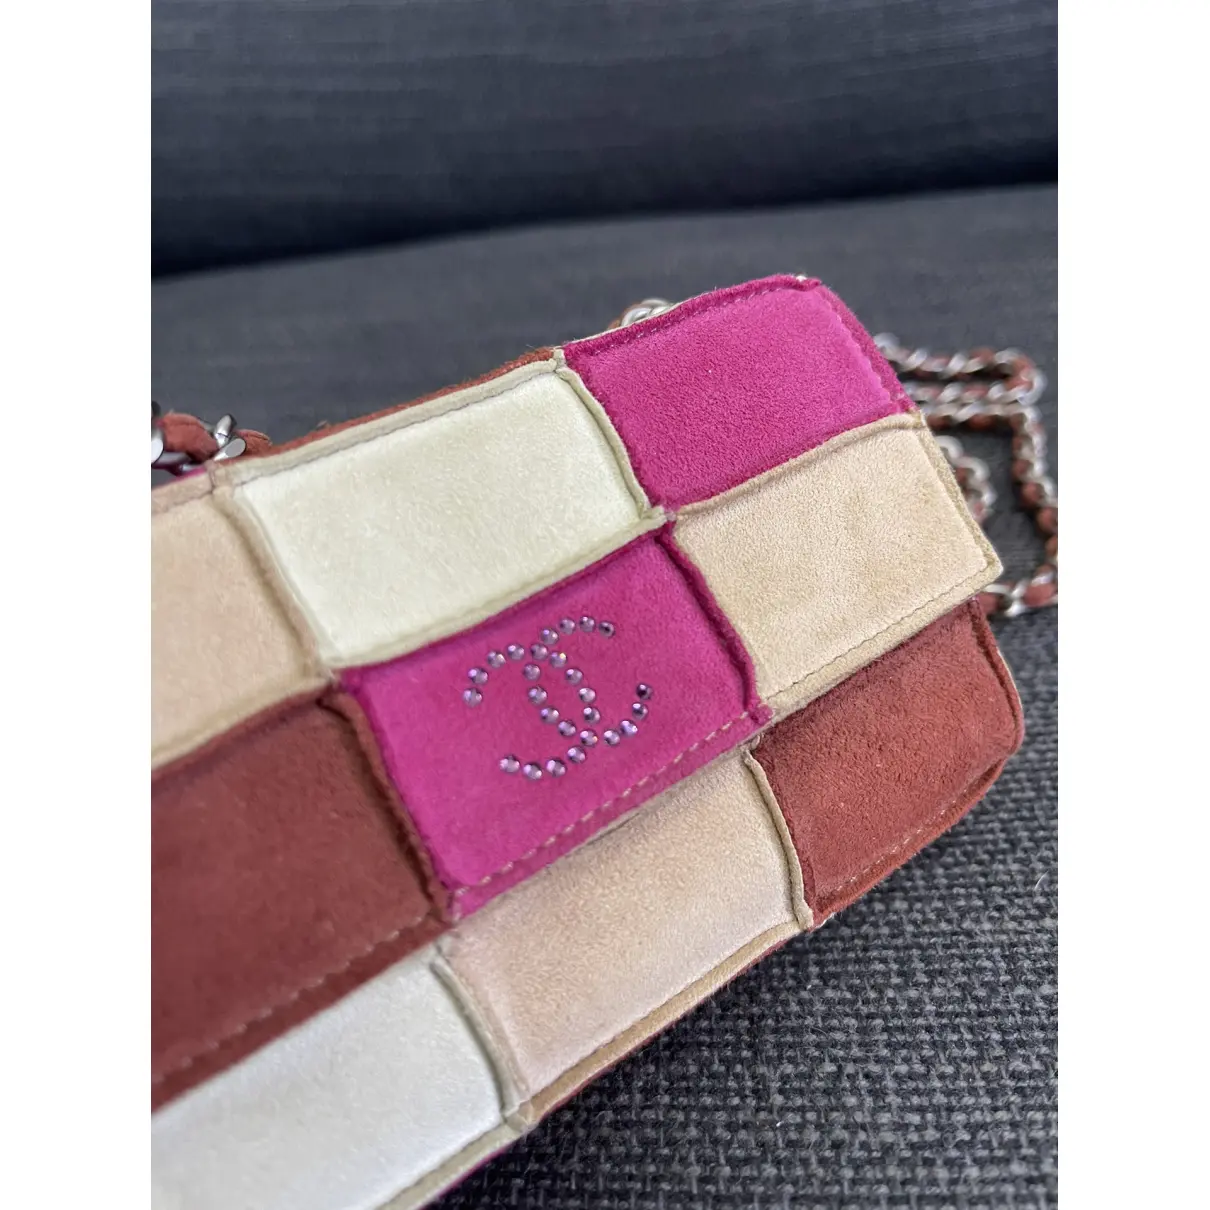 Buy Chanel Mini bag online